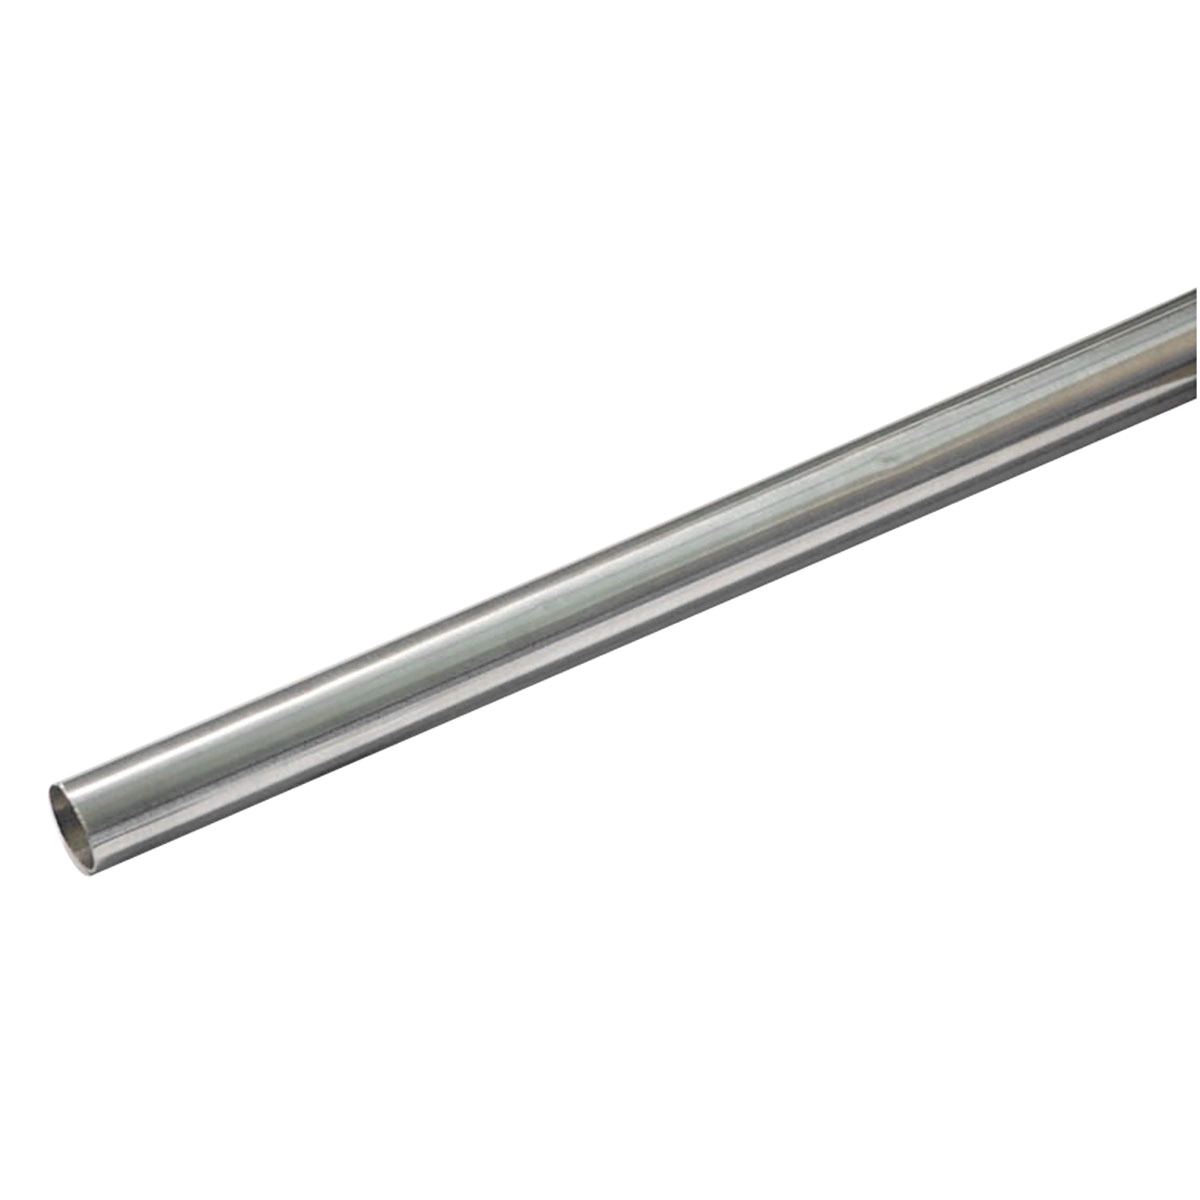 Shower Rods - Steel Shower Rod - 6' - Aluminum